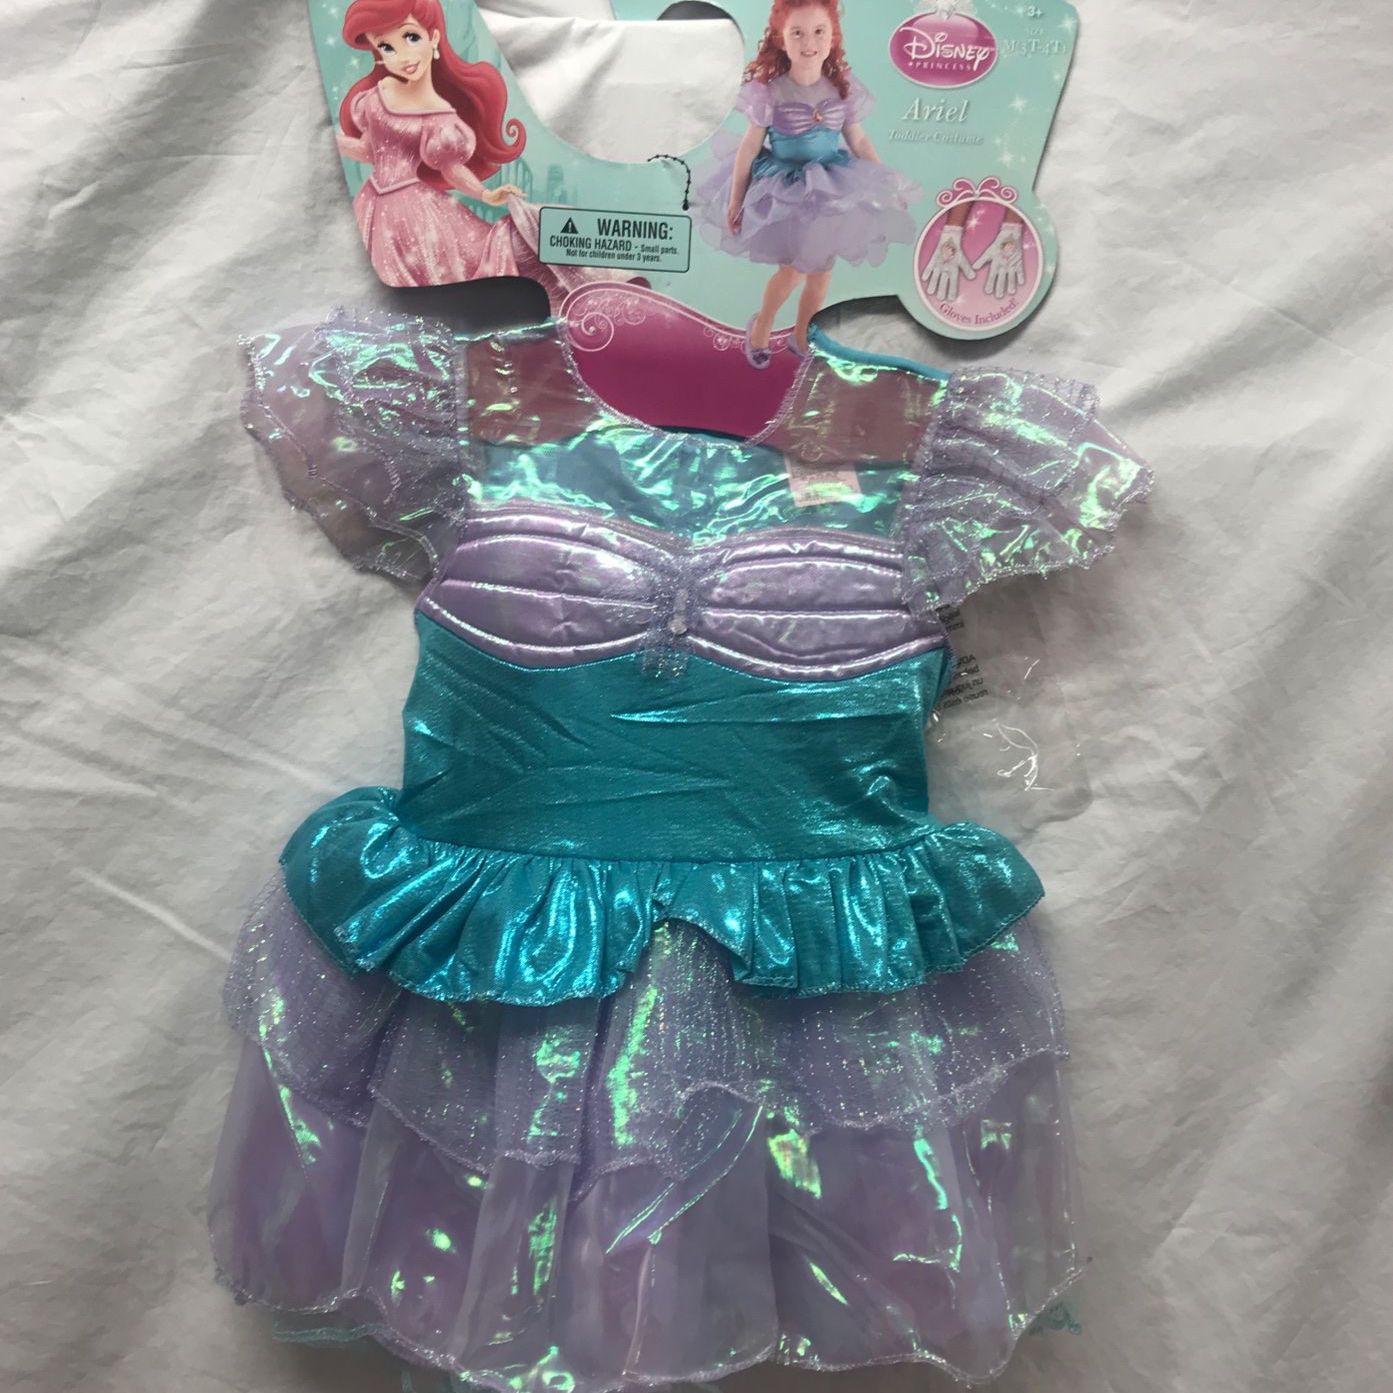 Disney Ariel Mermaid Dress up Halloween costume